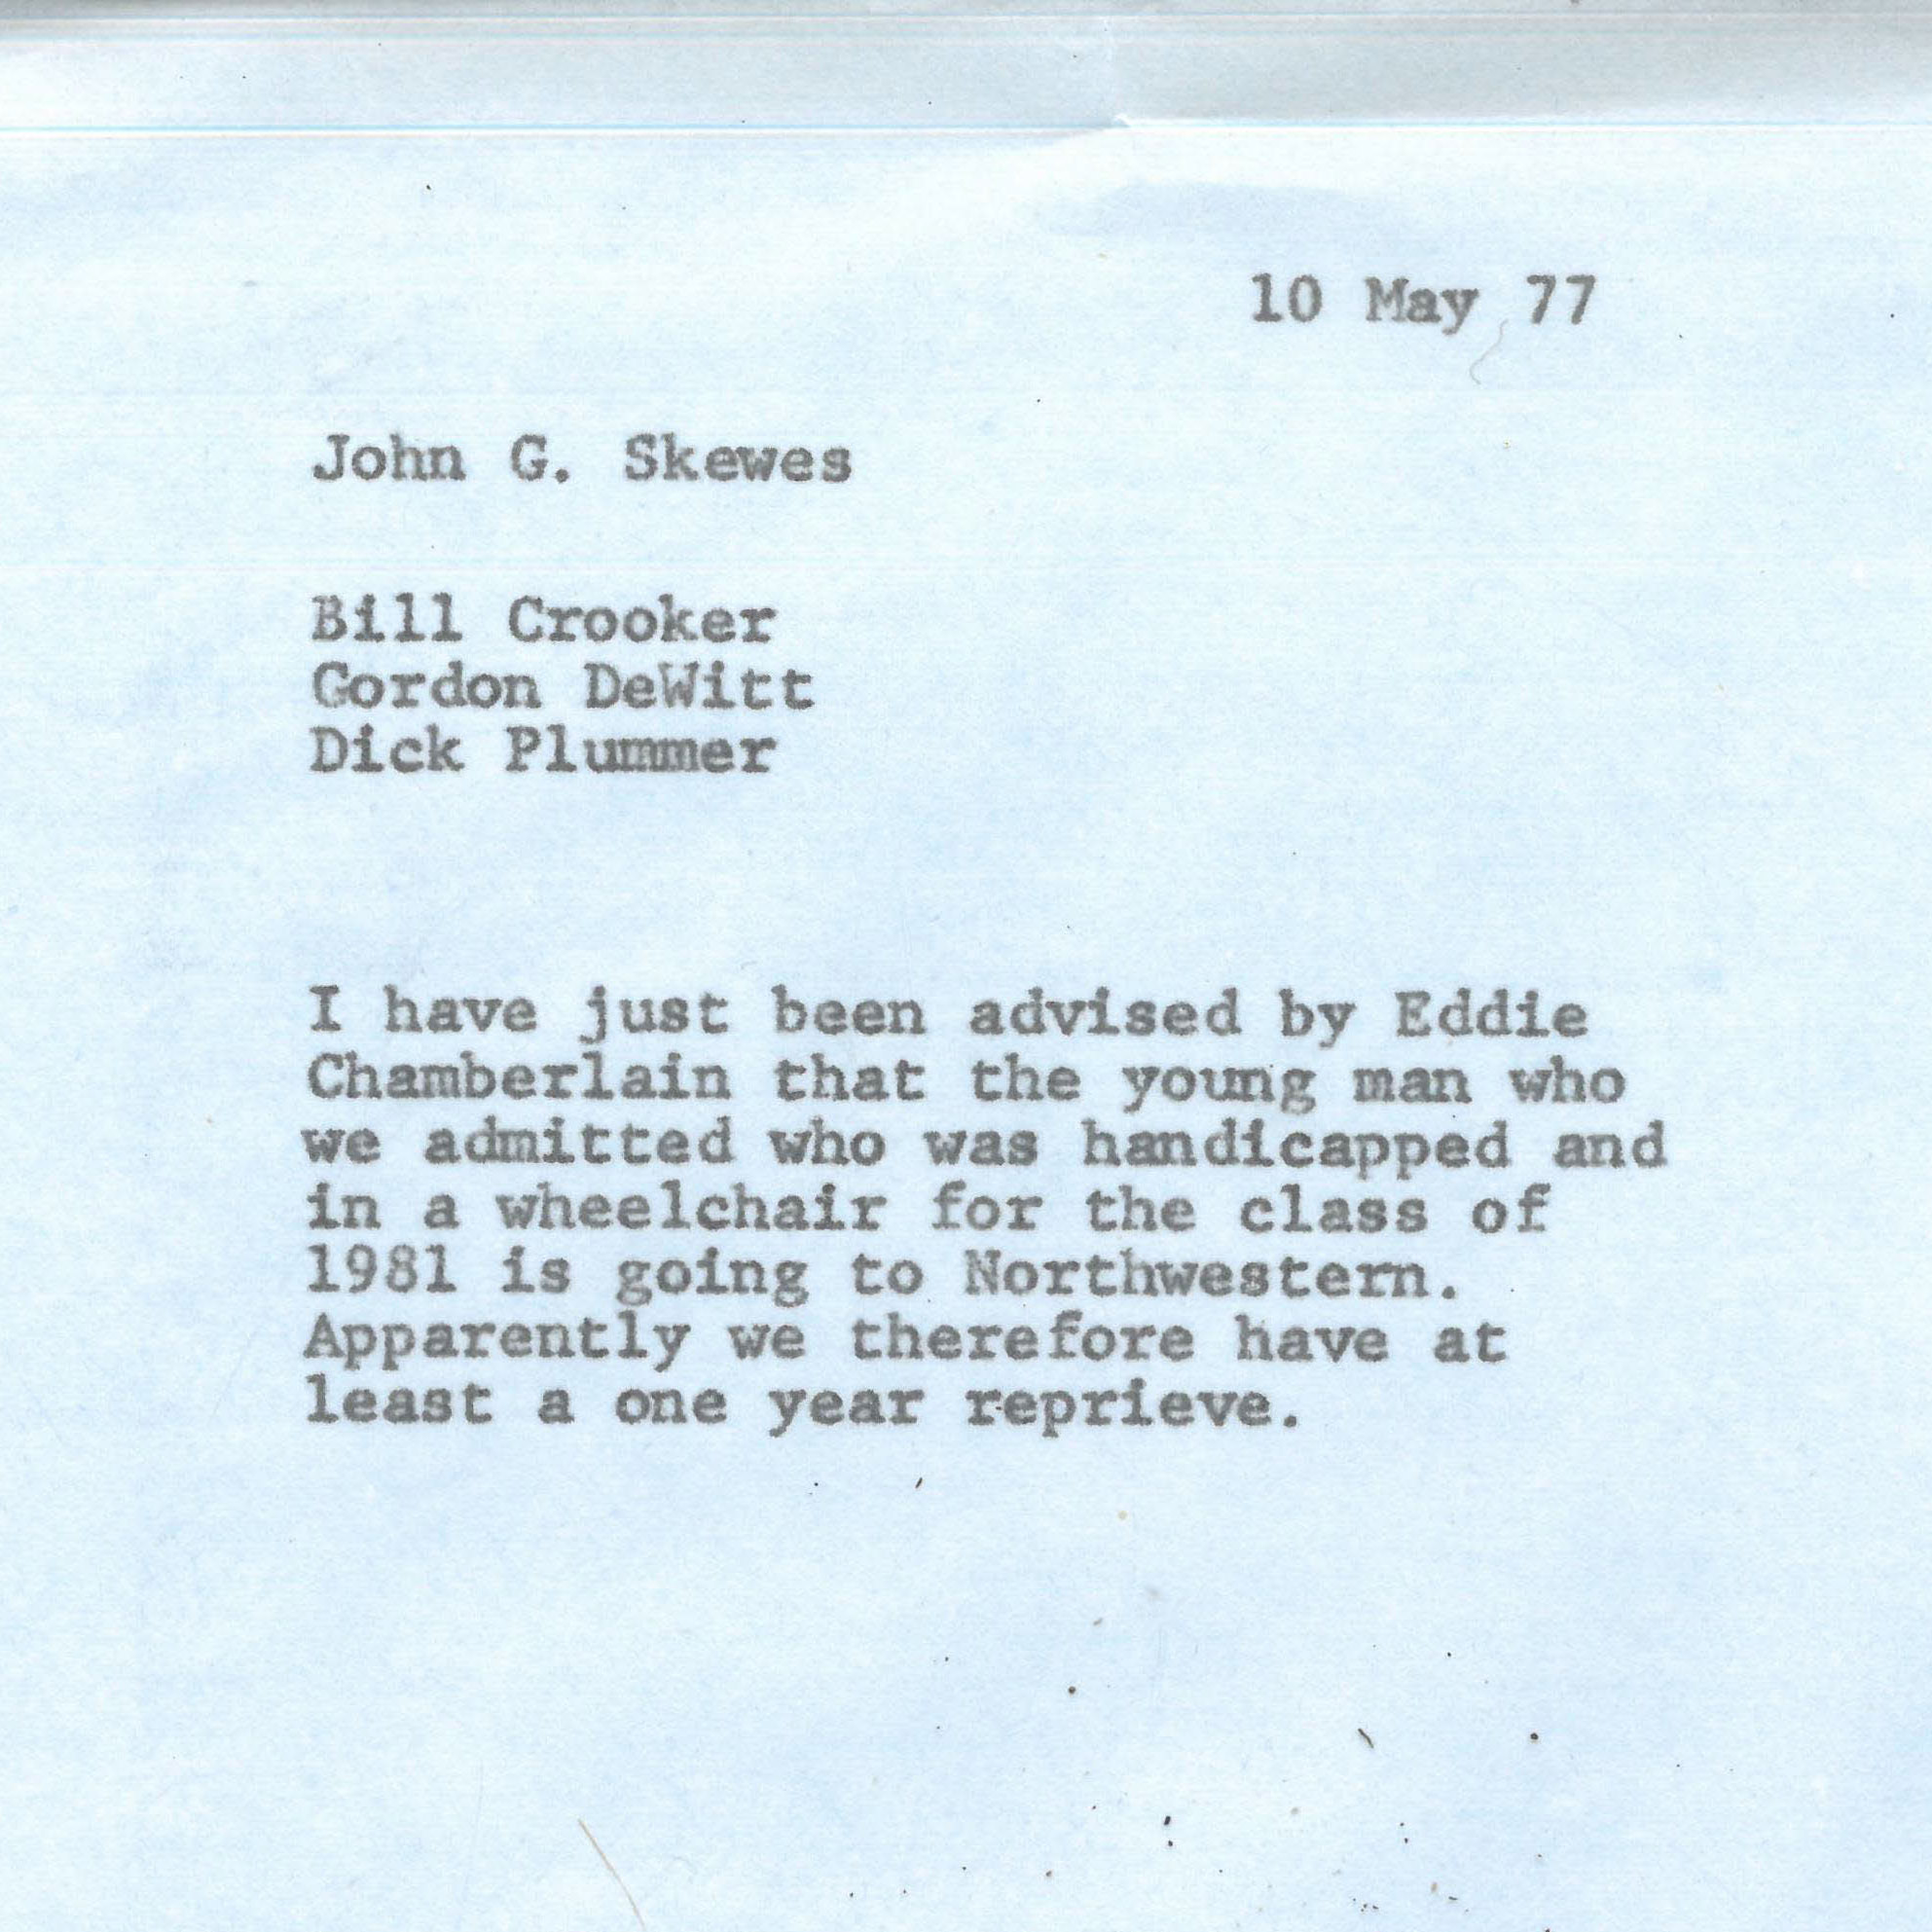 Memo from John G. Skewes to Bill Crooker, Gordon DeWitt, and Dick Plummer